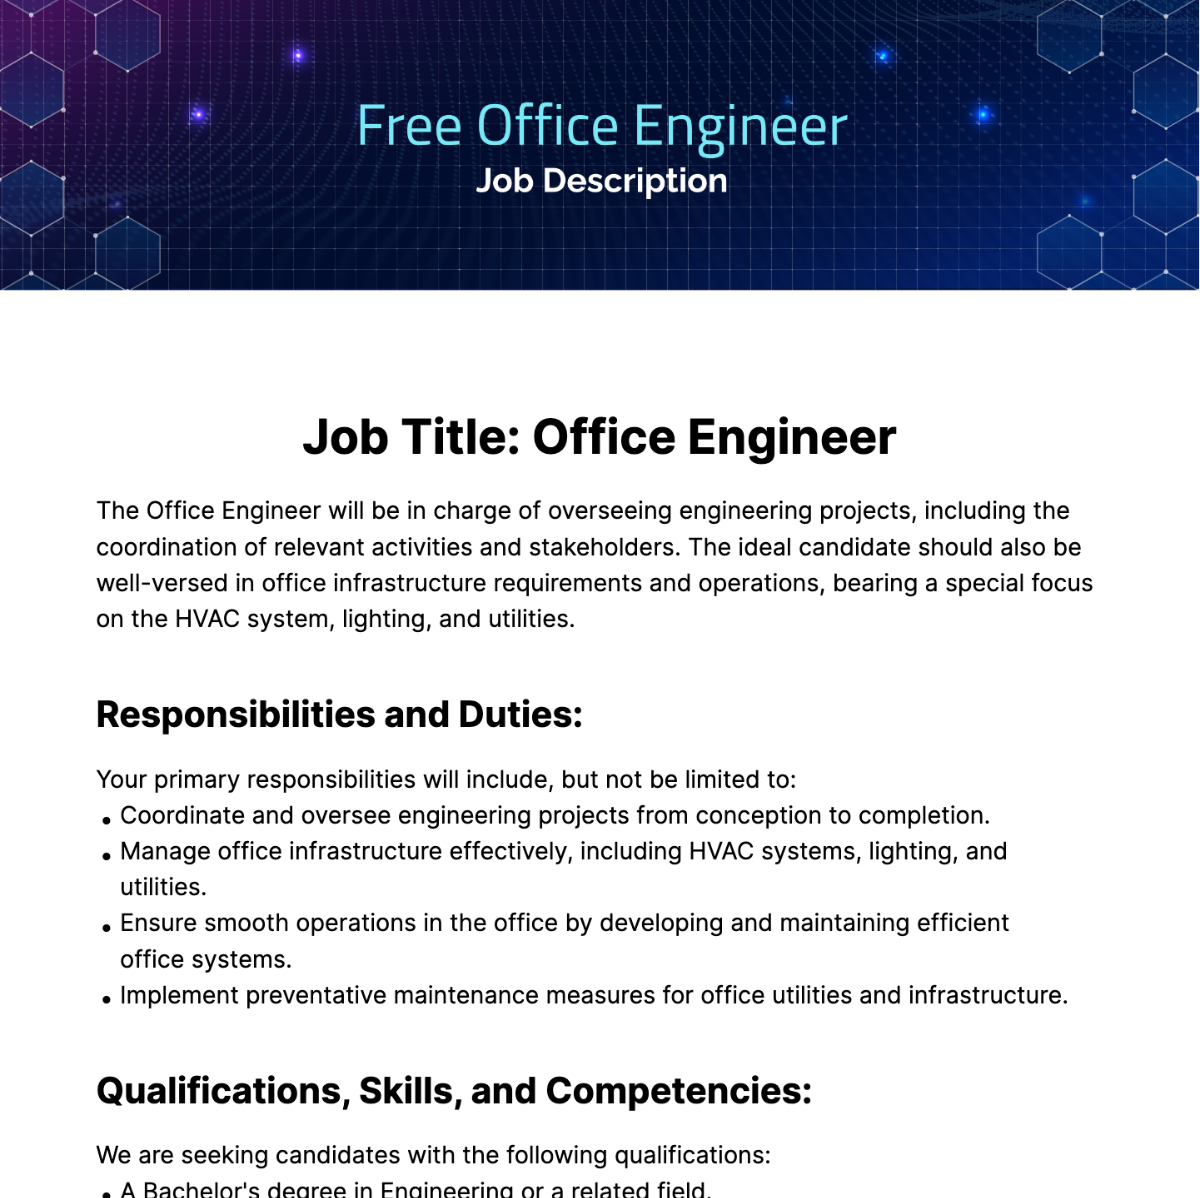 Free Office Engineer Job Description Template